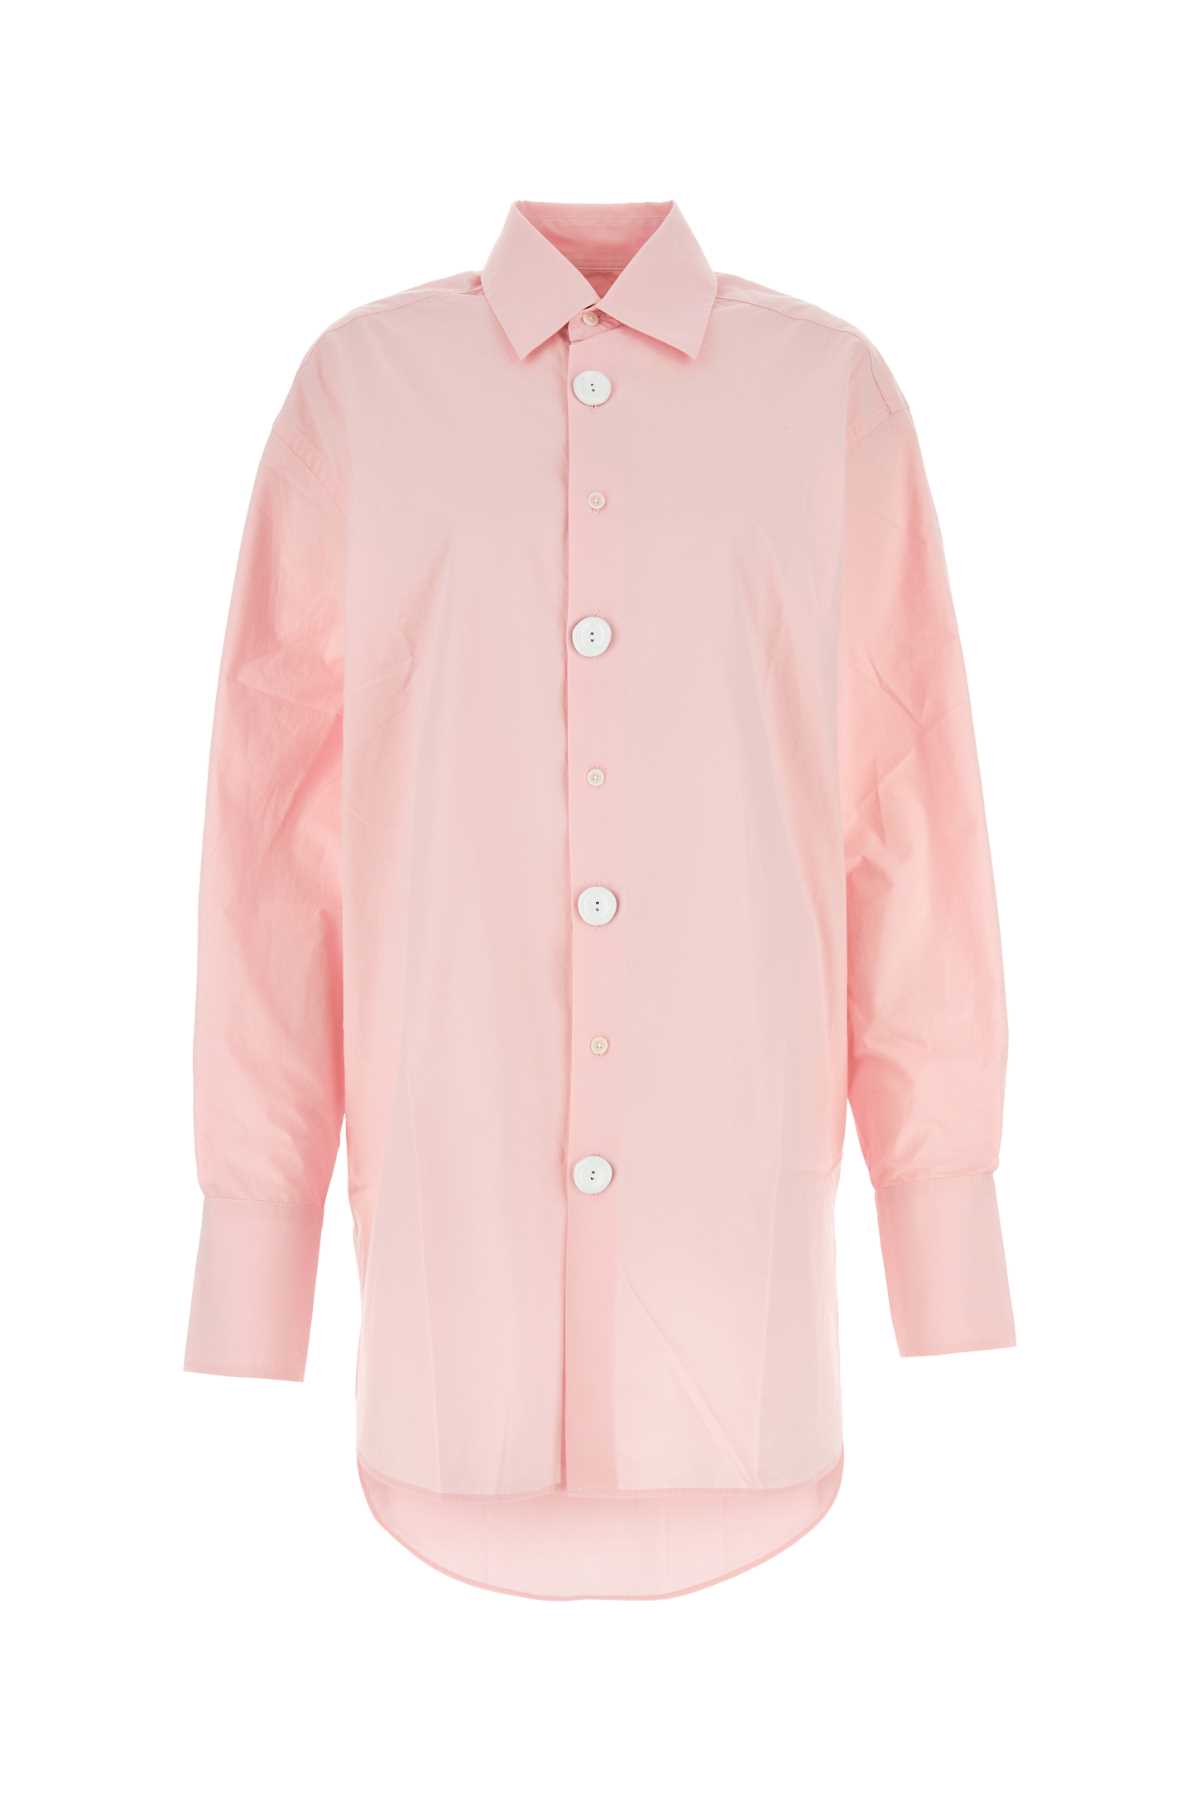 J.W. Anderson Pink Poplin Oversize Shirt